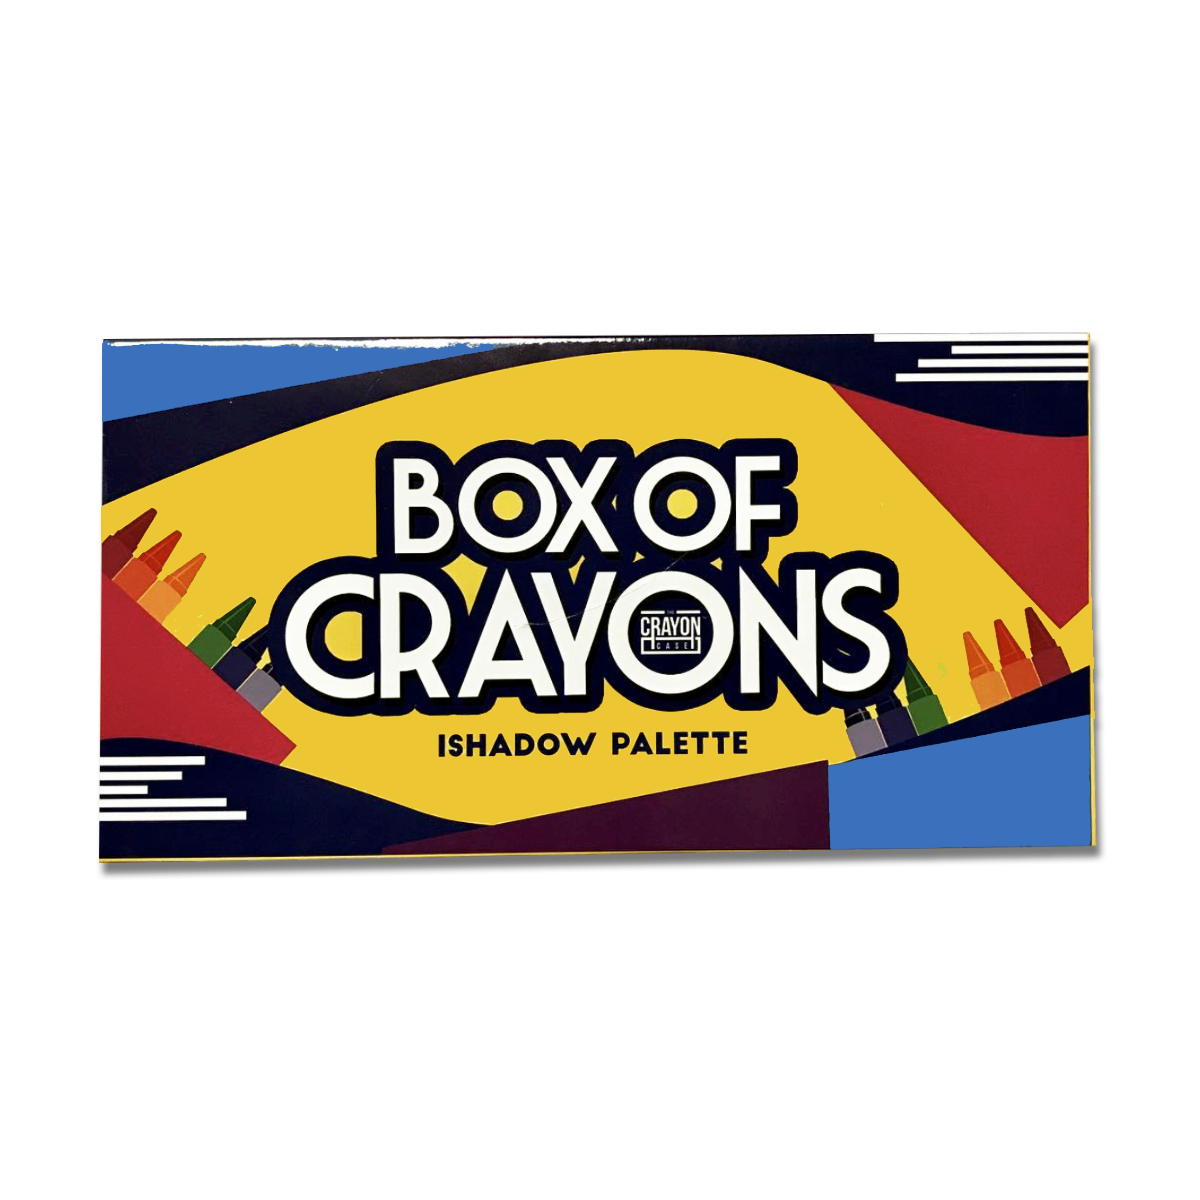 The Crayon Case Cosmetics on X: #BoxOfCrayonsPalette restock soon